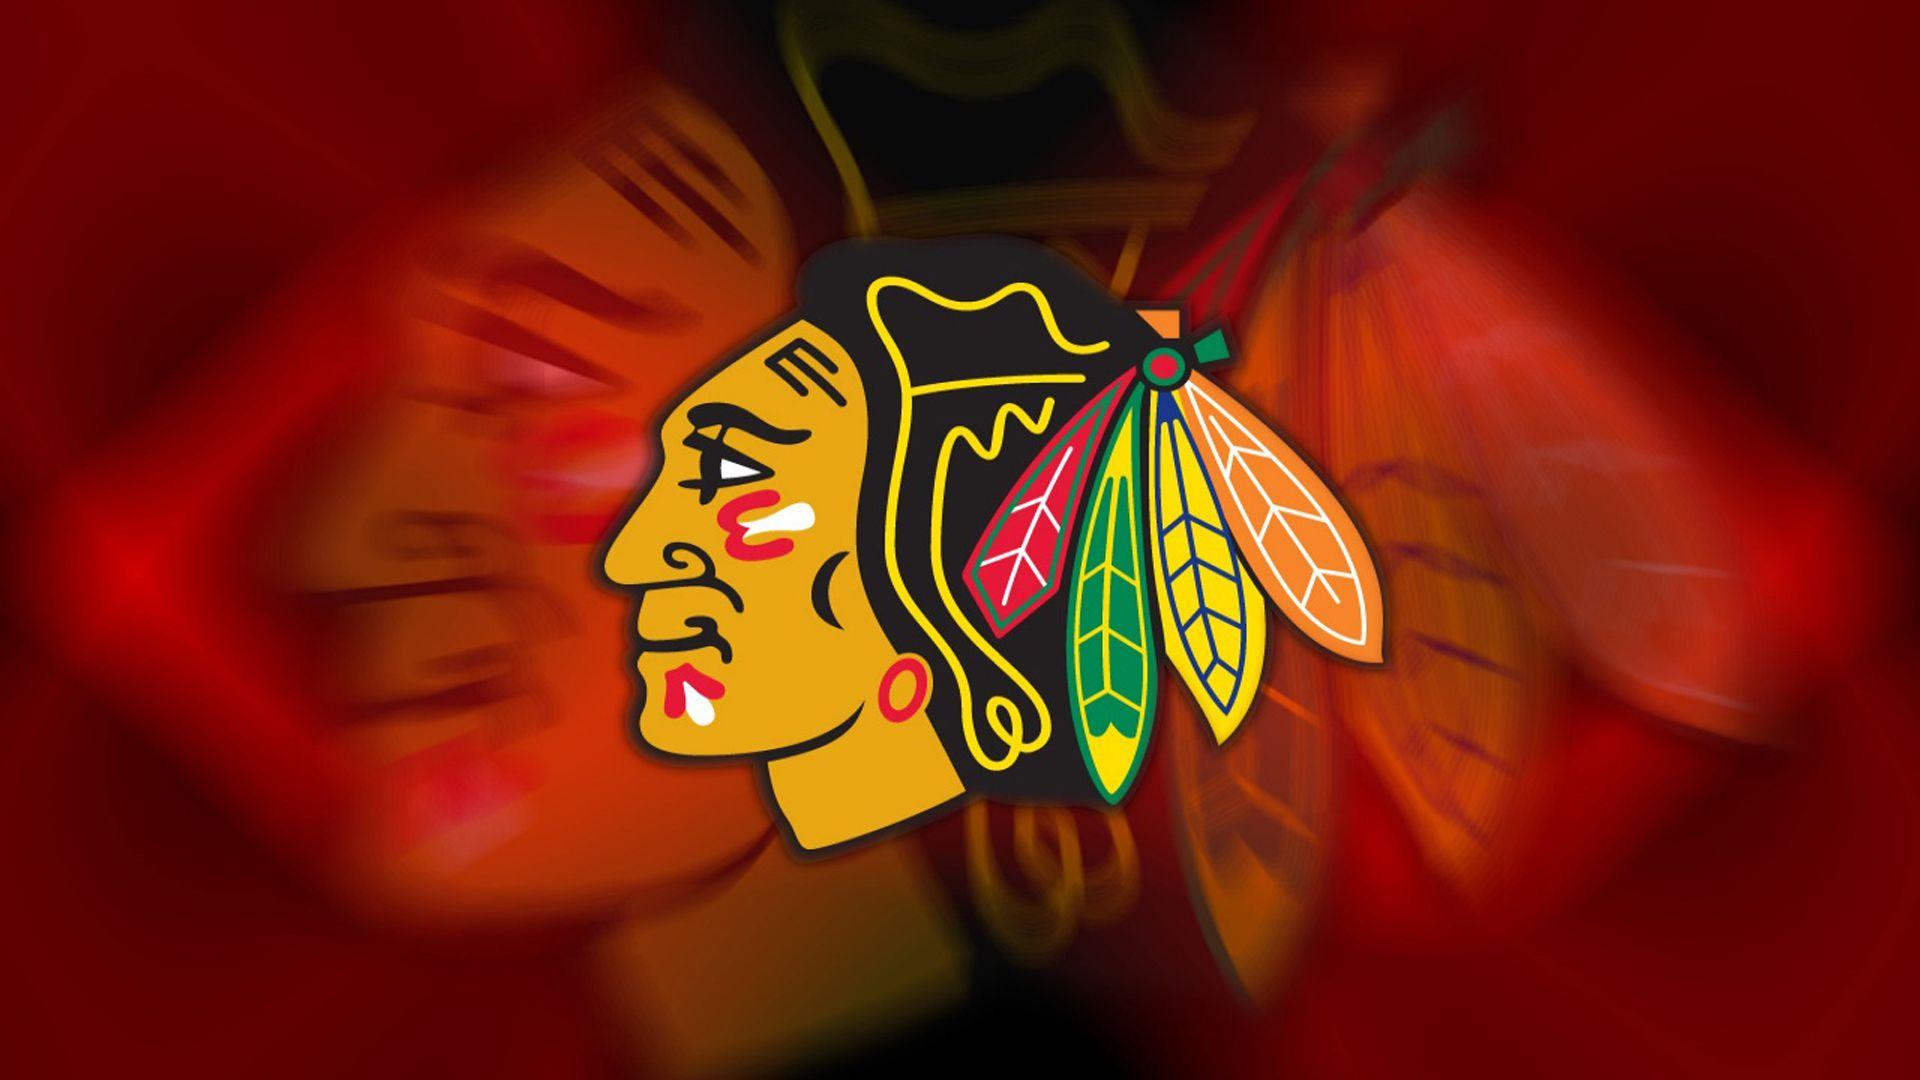 NHL Chicago Blackhawks Logo wallpaper 2018 in Hockey